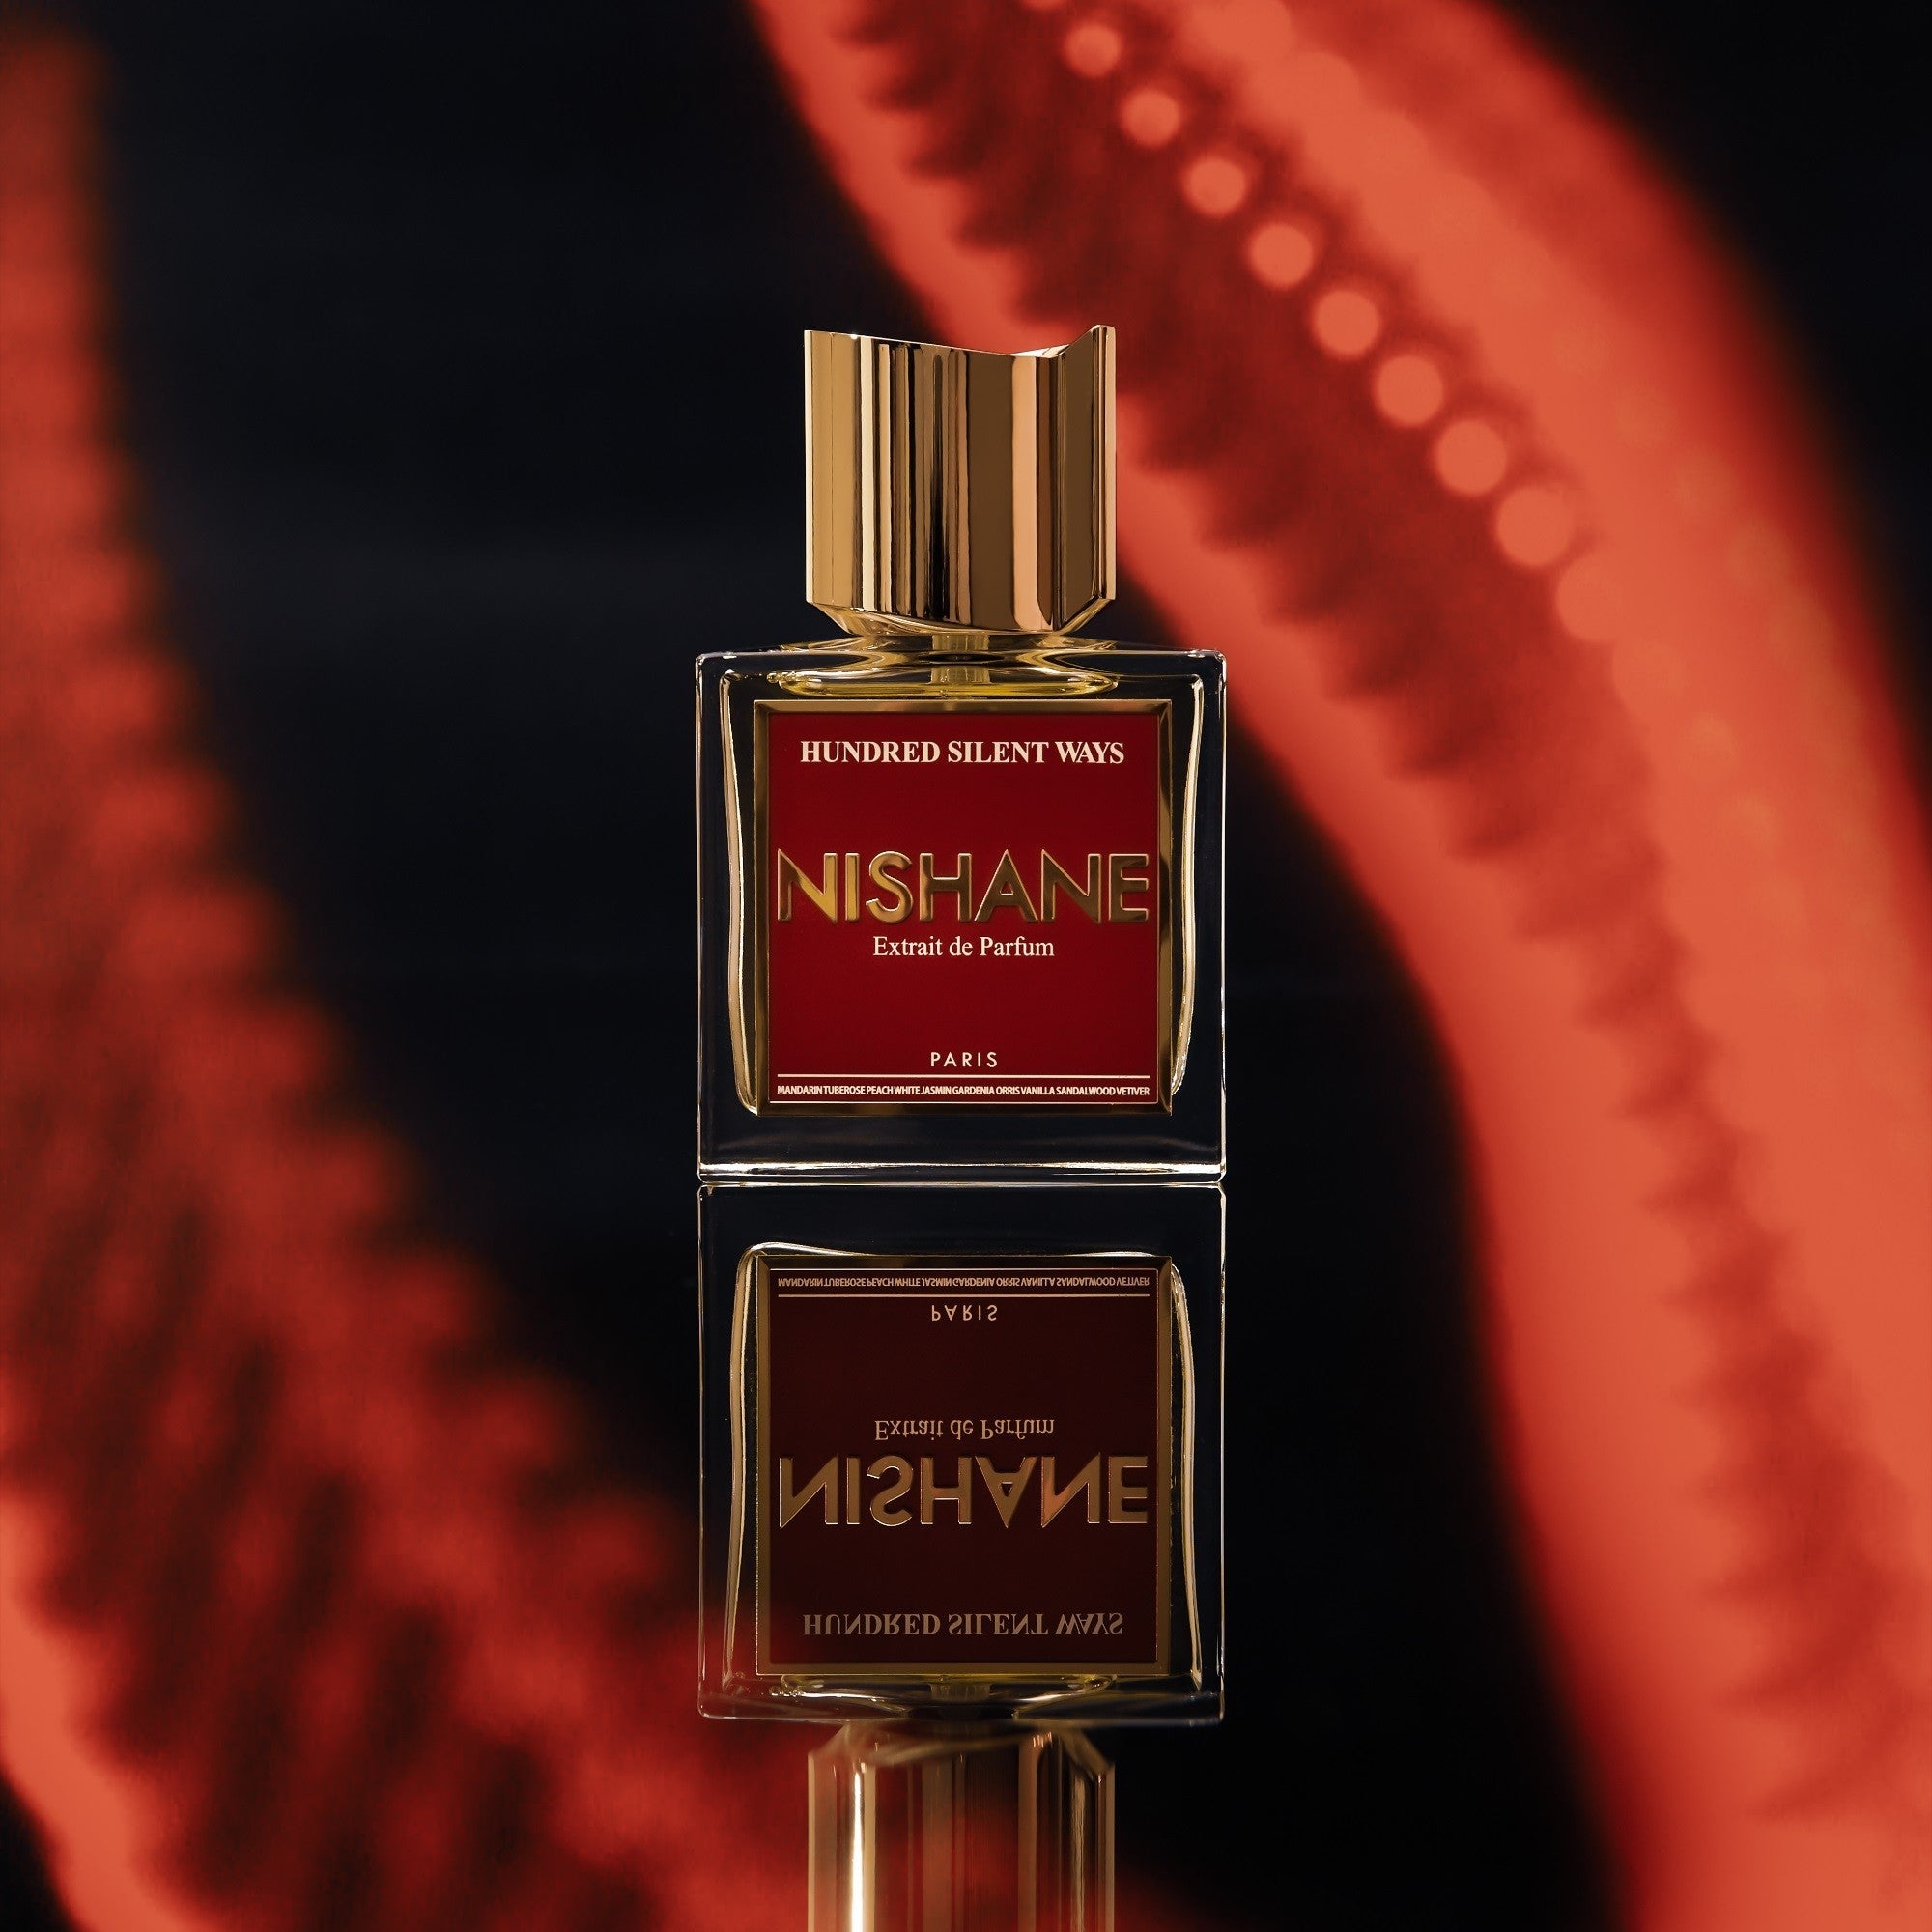 Nishane Hundred Silent Ways Hair Perfume | My Perfume Shop Australia